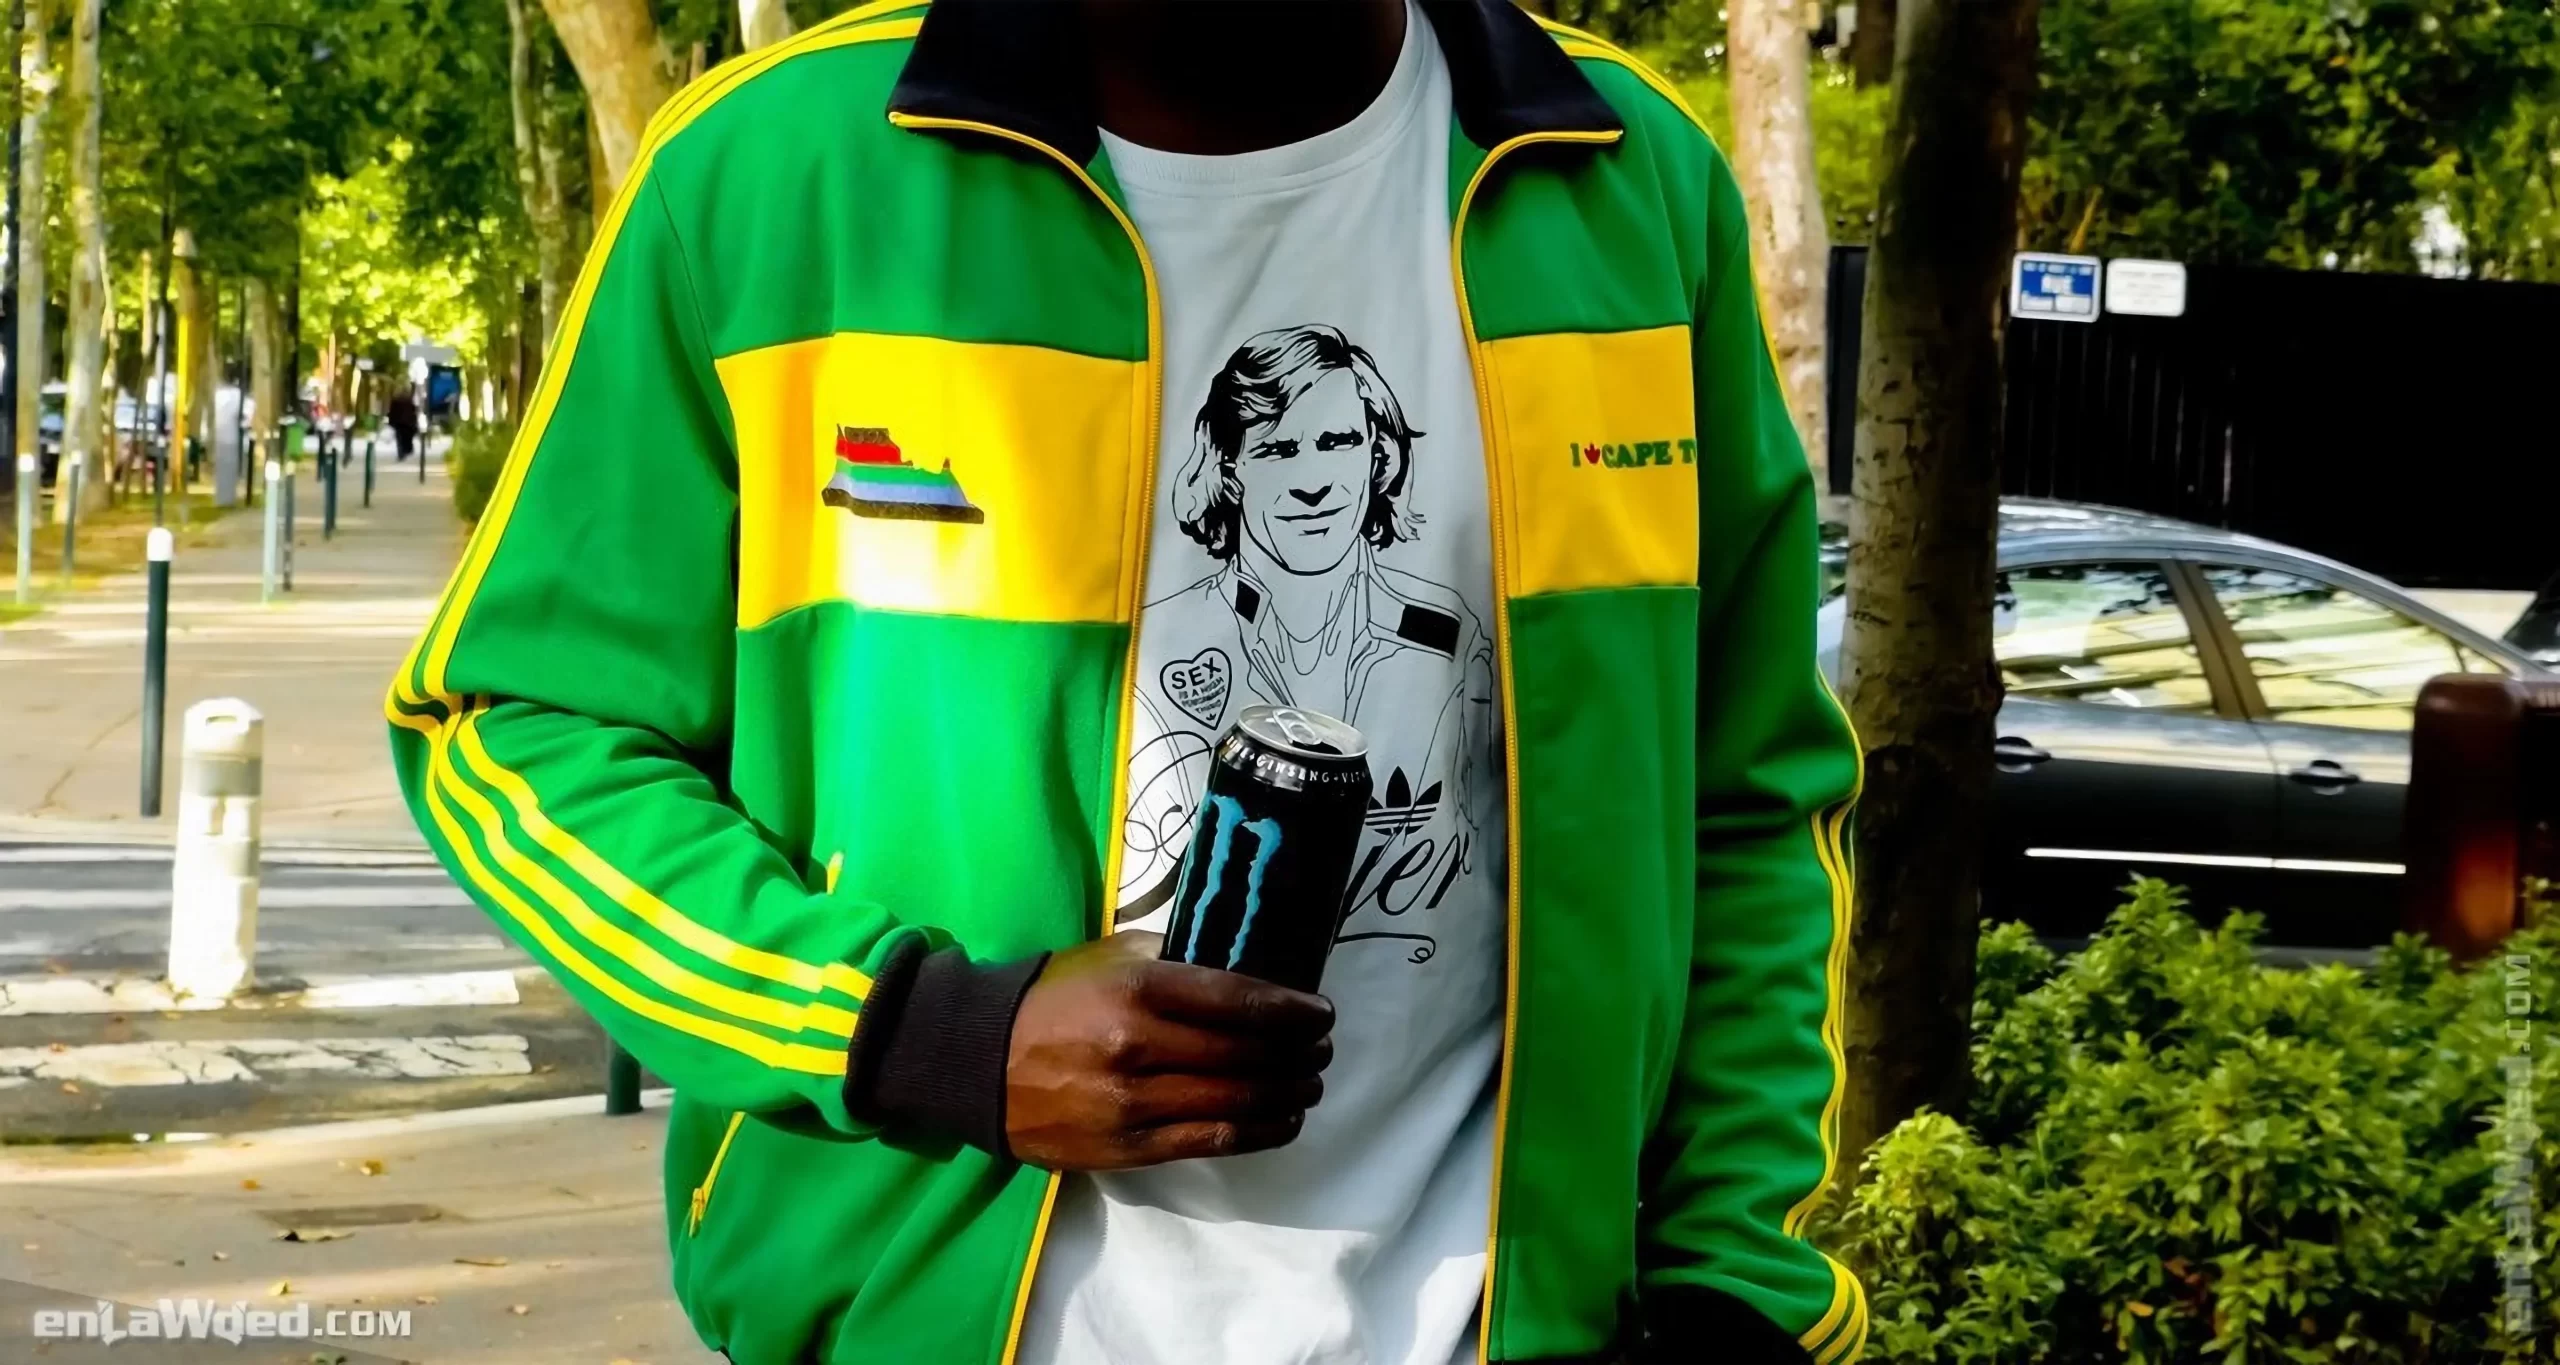 Men’s 2006 Cape Town TT by Adidas Originals: Passionate (EnLawded.com file #lmchk90455ip2y122277kg9st)